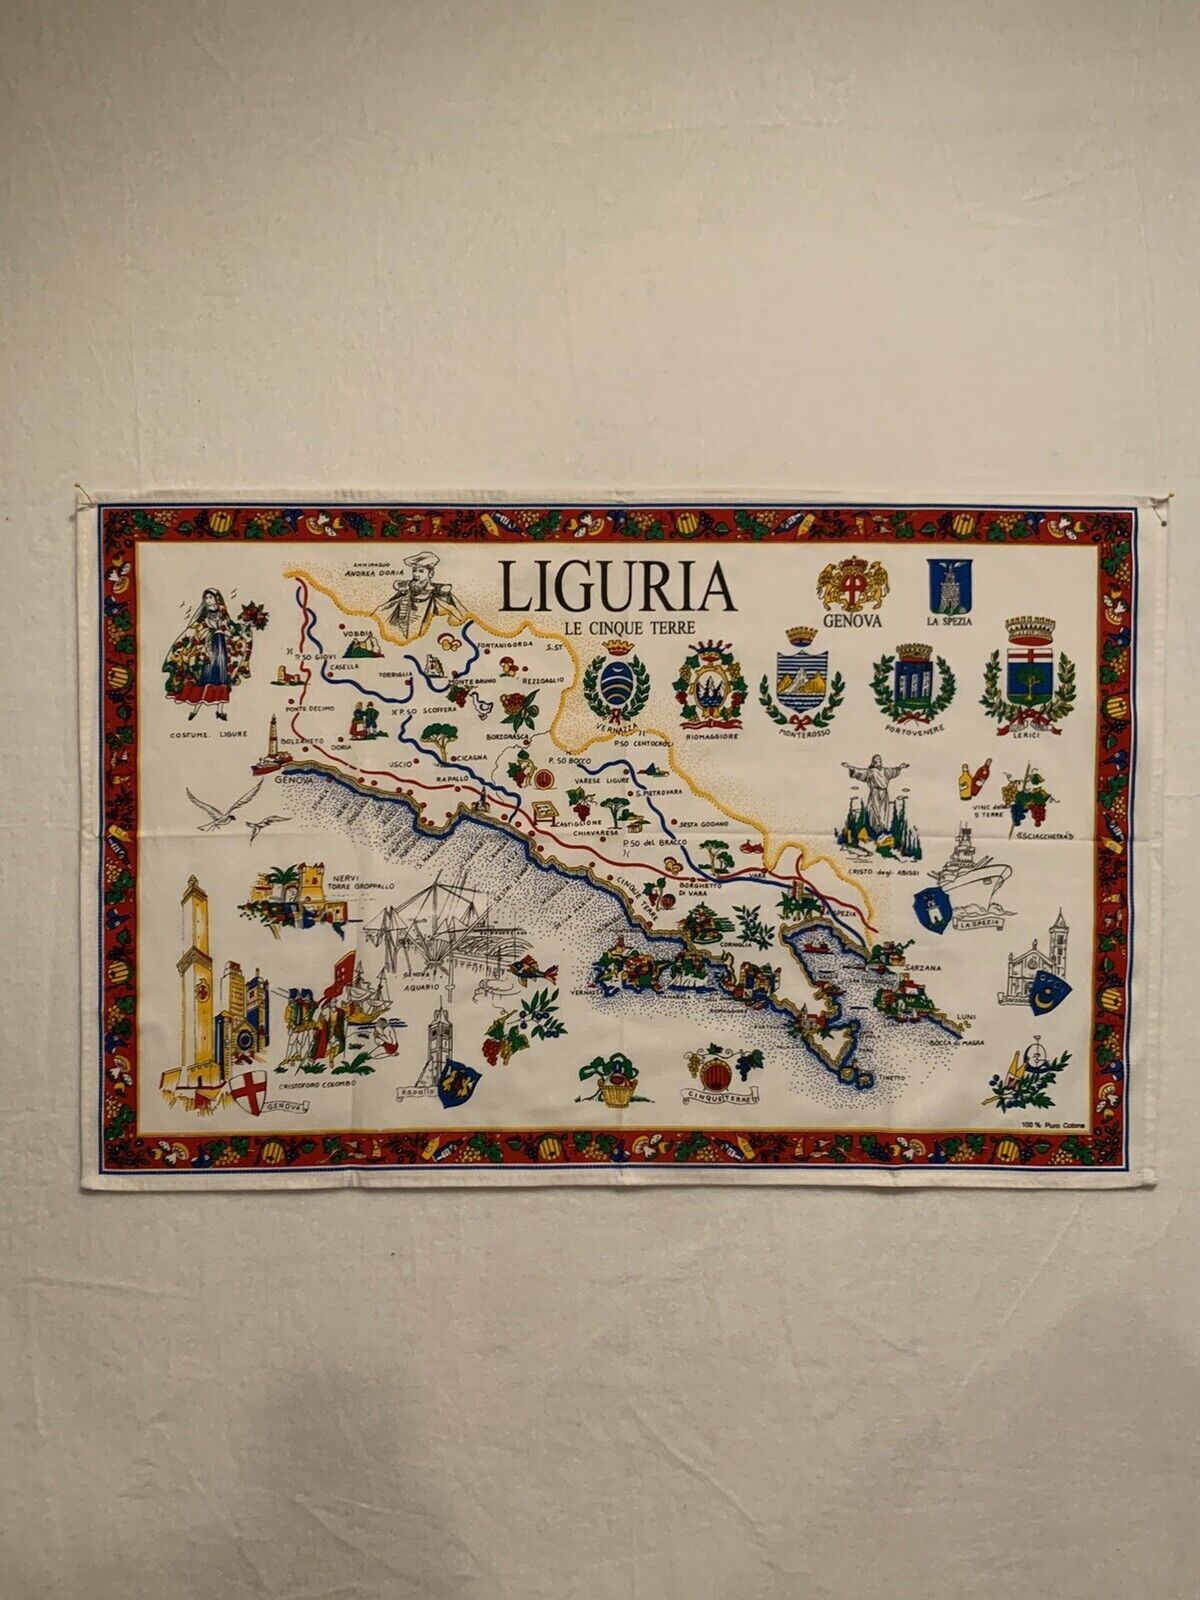 Liguria Cloth Towel Italy Italian Riviera large souvenir wall hanging 22x34